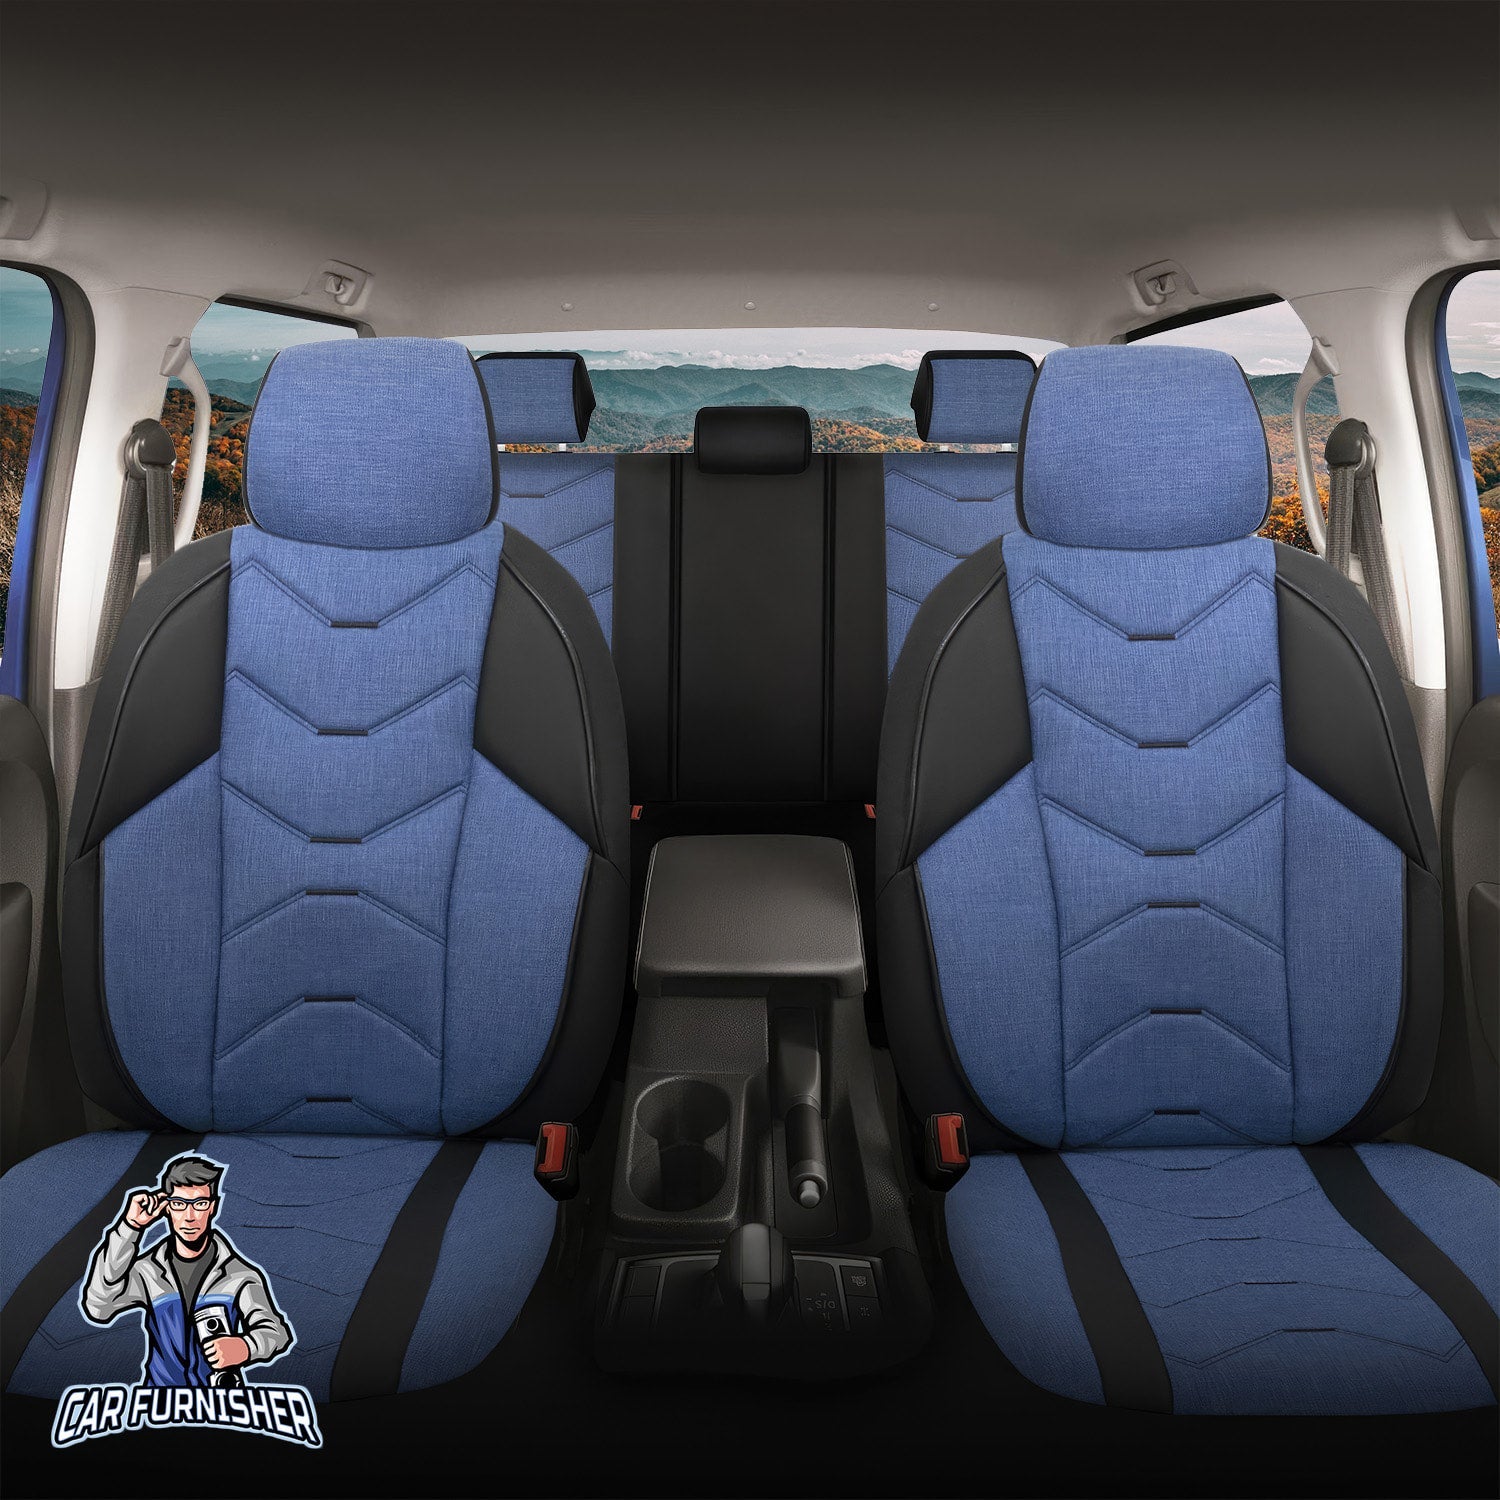 Mercedes 190 Seat Covers Verita Elegance Design Blue 5 Seats + Headrests (Full Set) Leather & Linen Fabric